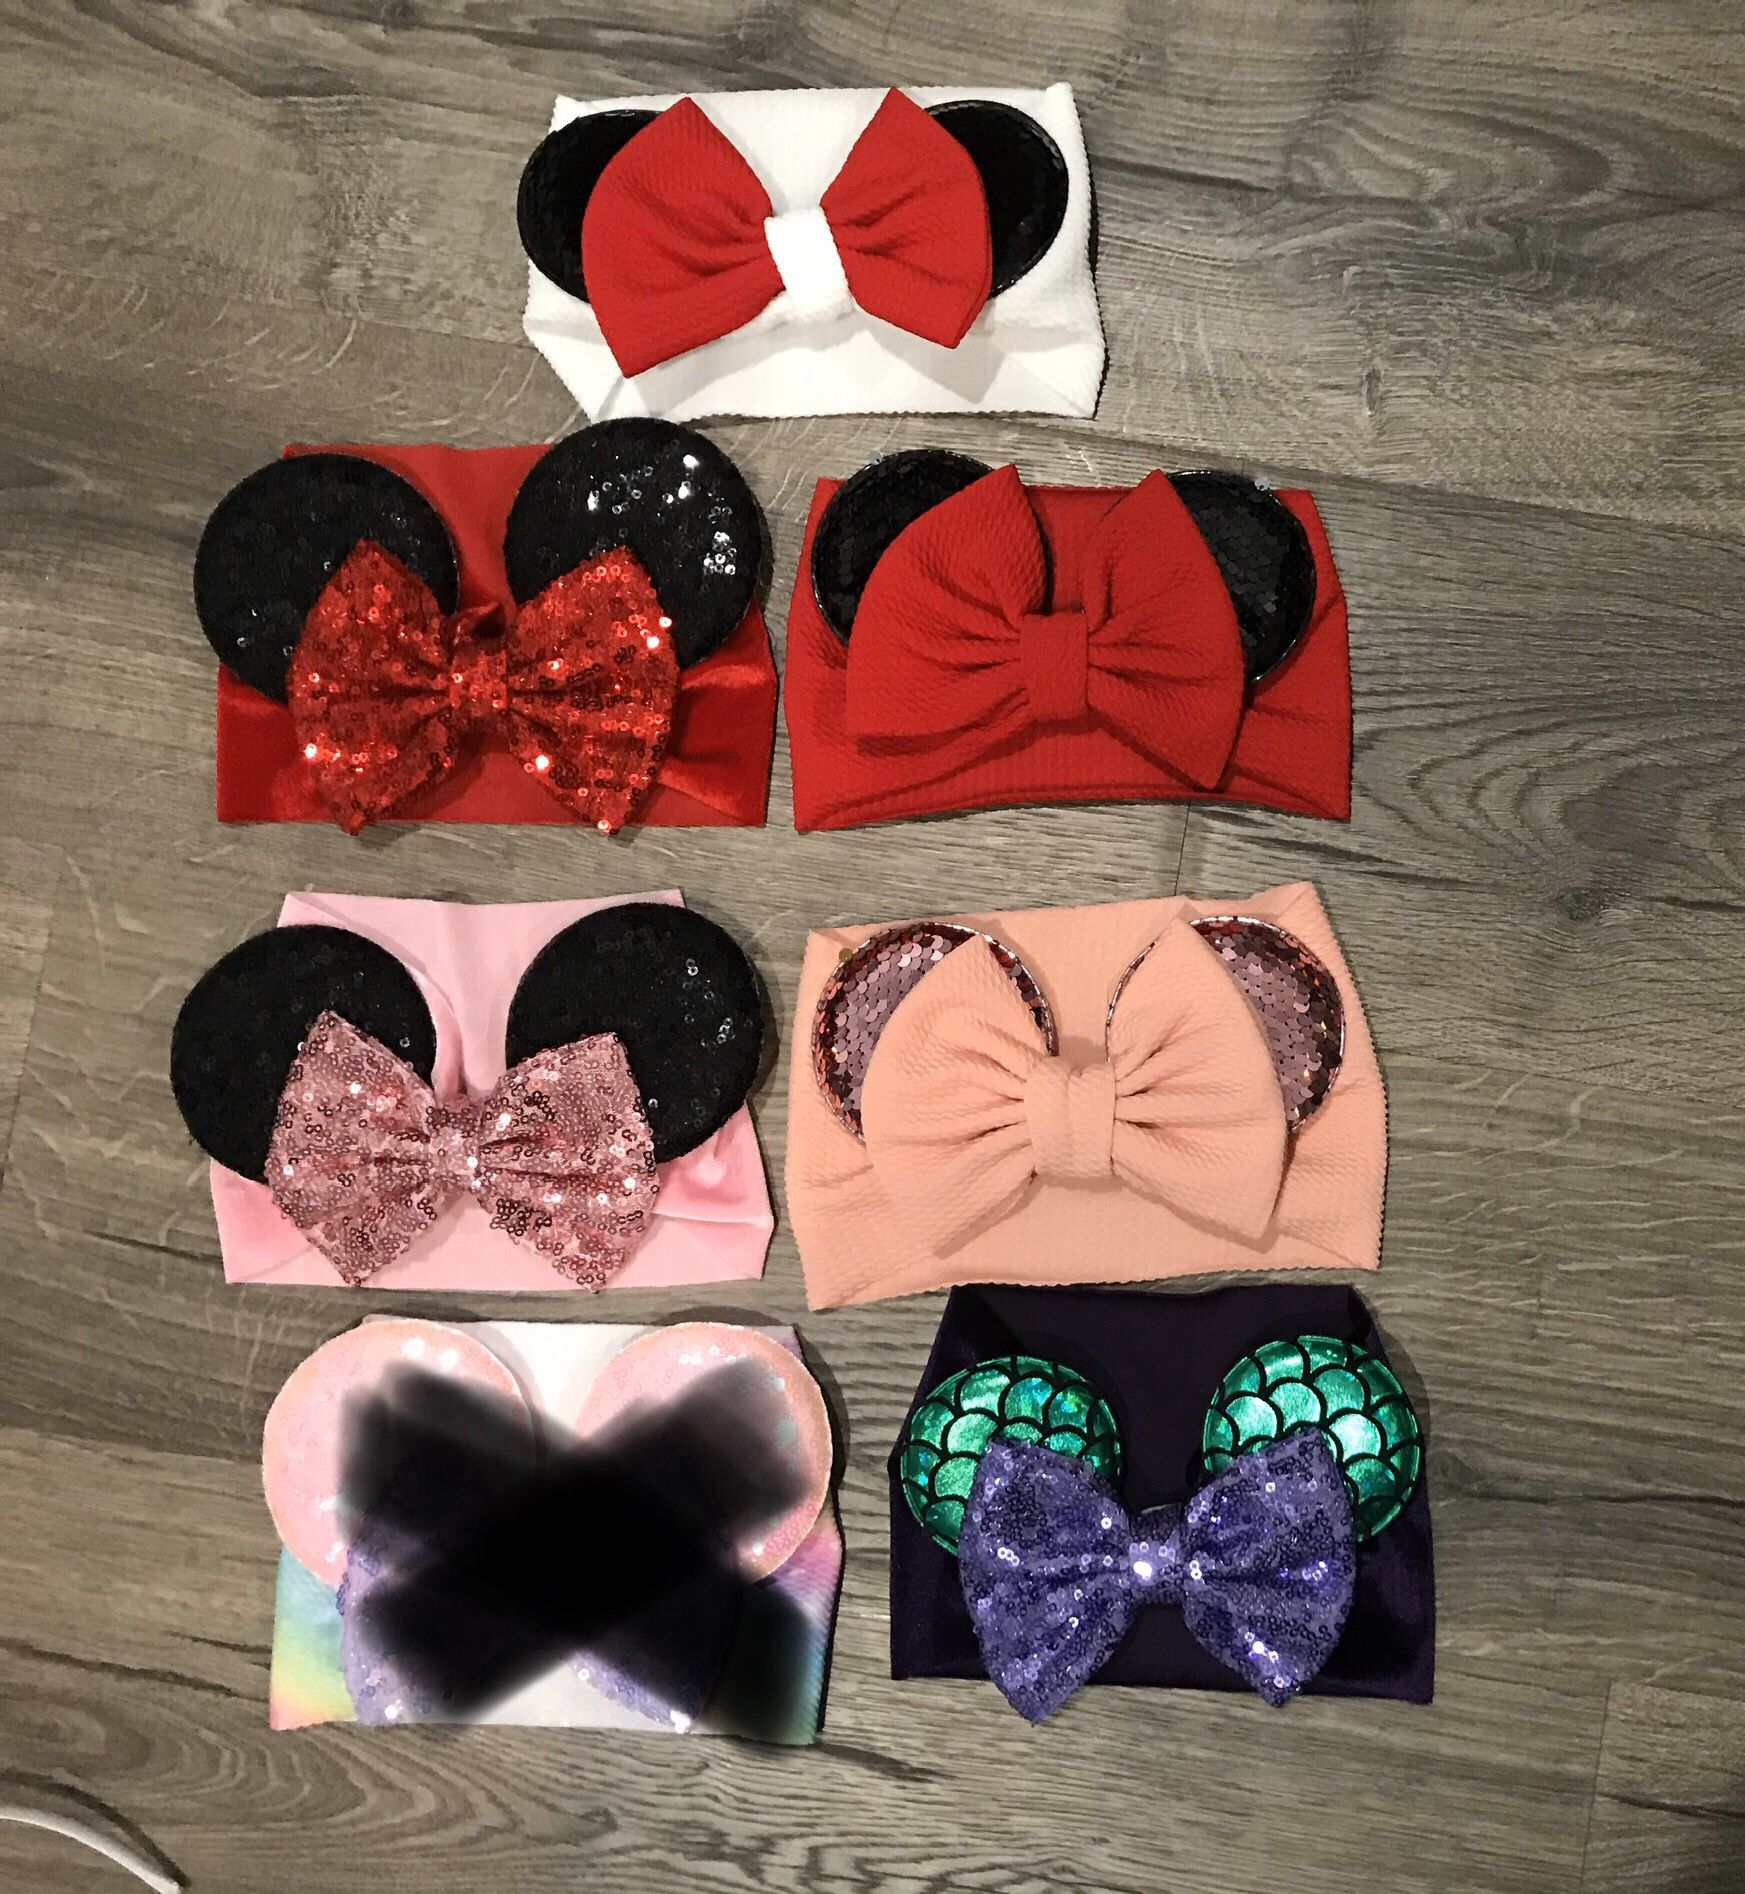 Minnie Mouse ear turbans $10 each